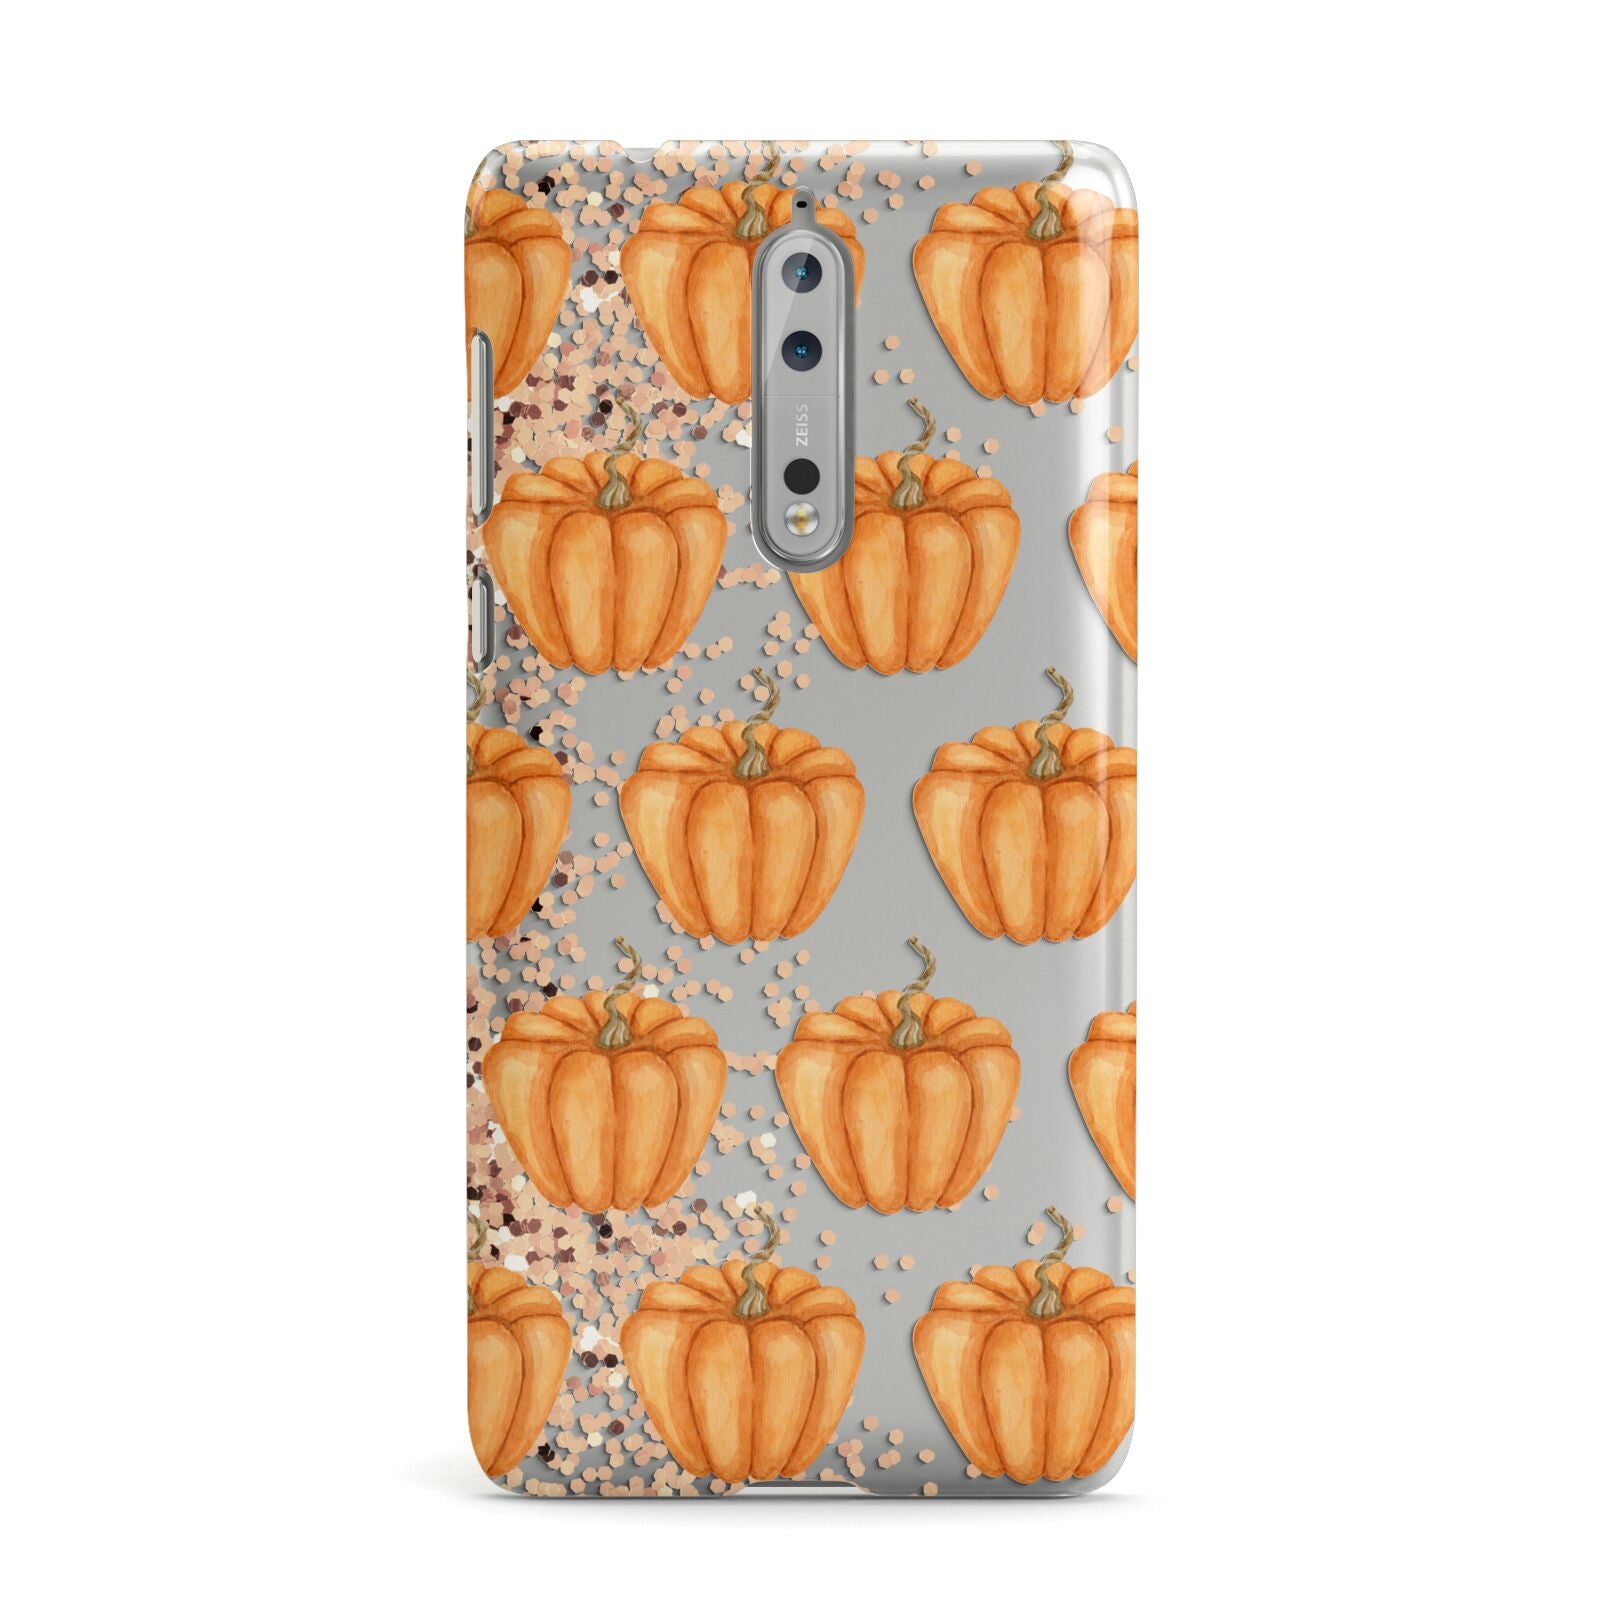 Shimmery Pumpkins Nokia Case